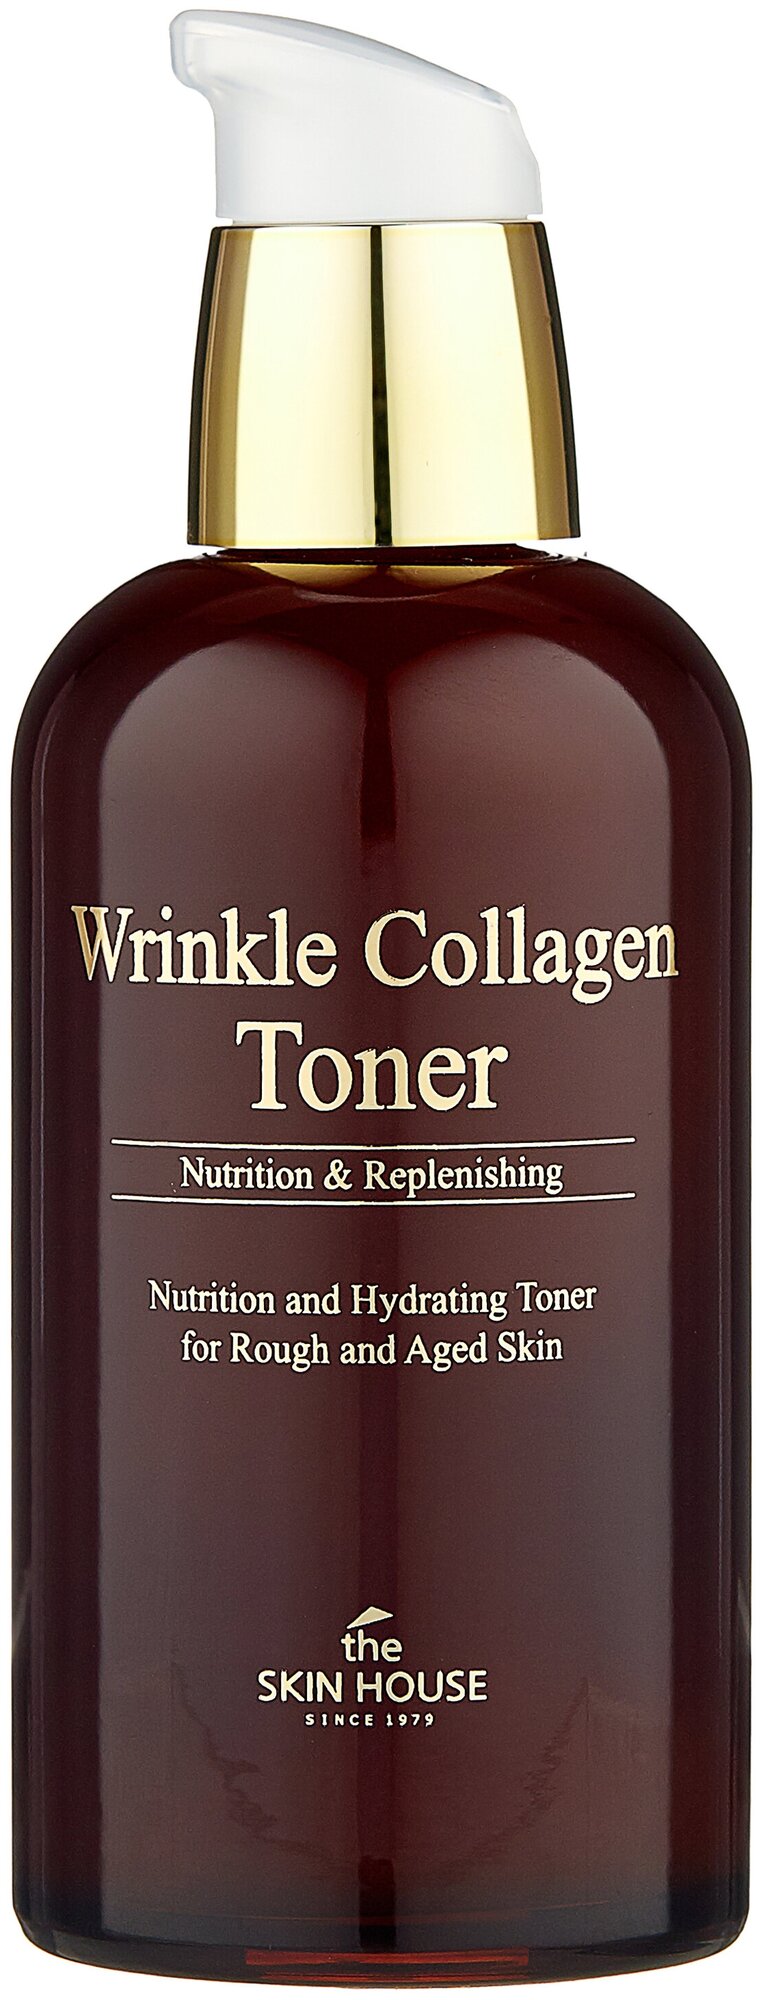 Тонер The Skin House Wrinkle Collagen, 130 мл